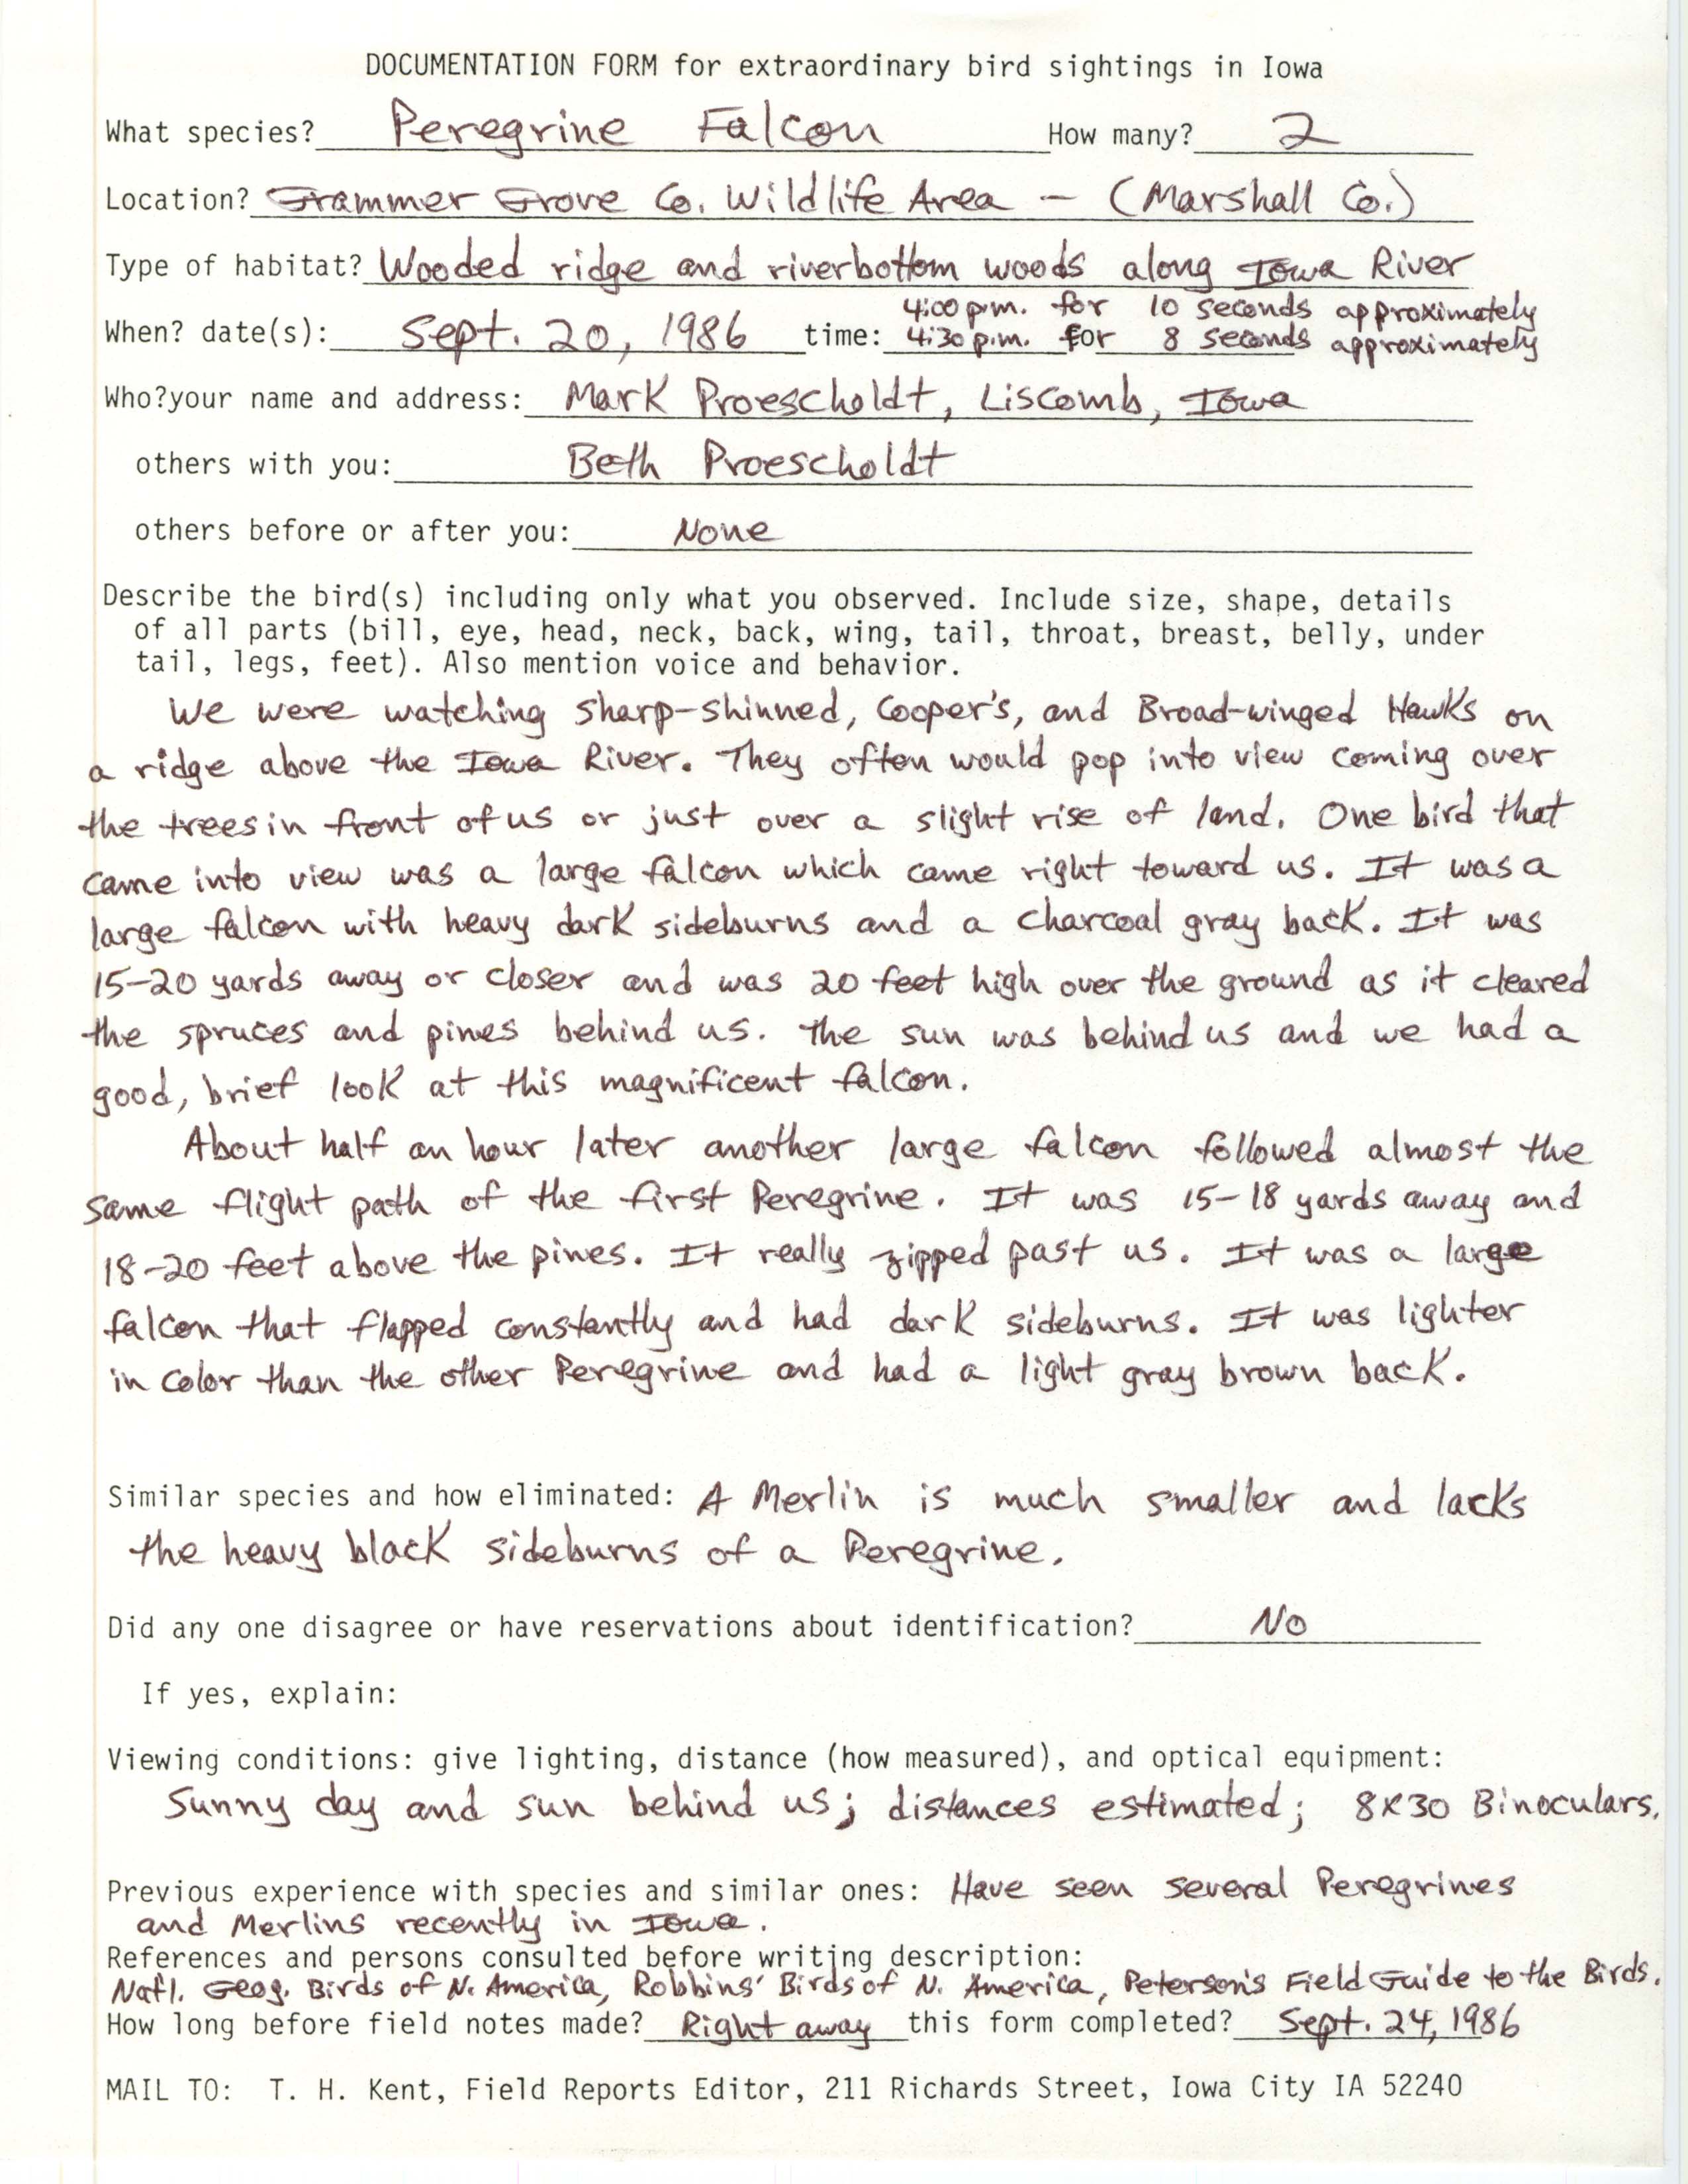 Rare bird documentation form for Peregrine Falcon at Grammer Grove County Wildlife Area, 1986